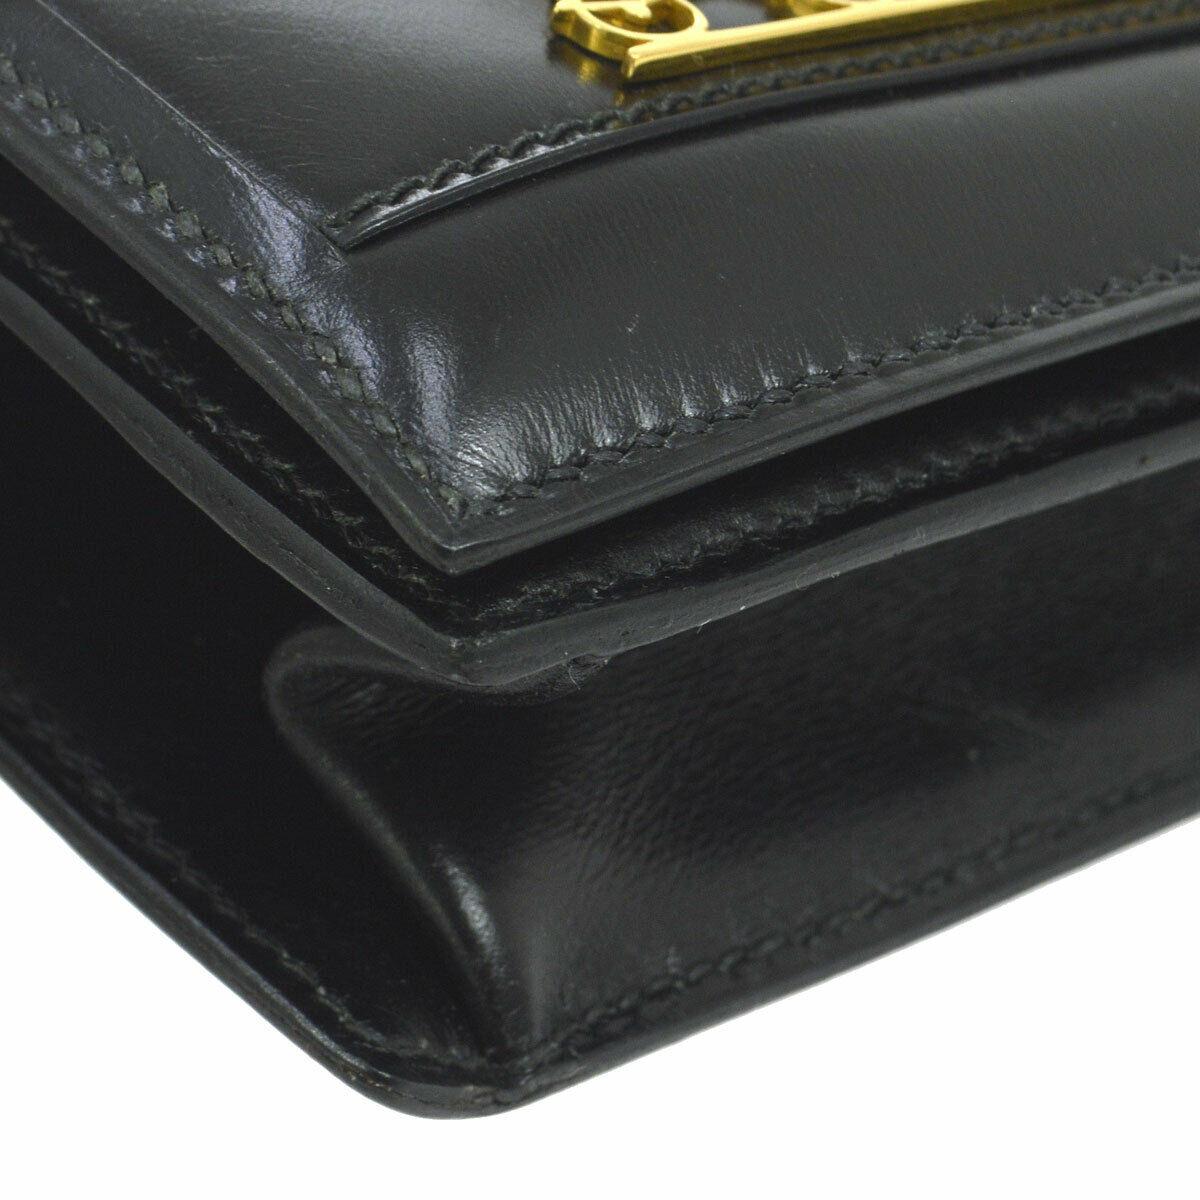 Hermes Black Leather Gold Emblem Evening Clutch Top Handle Satchel Flap Bag 3